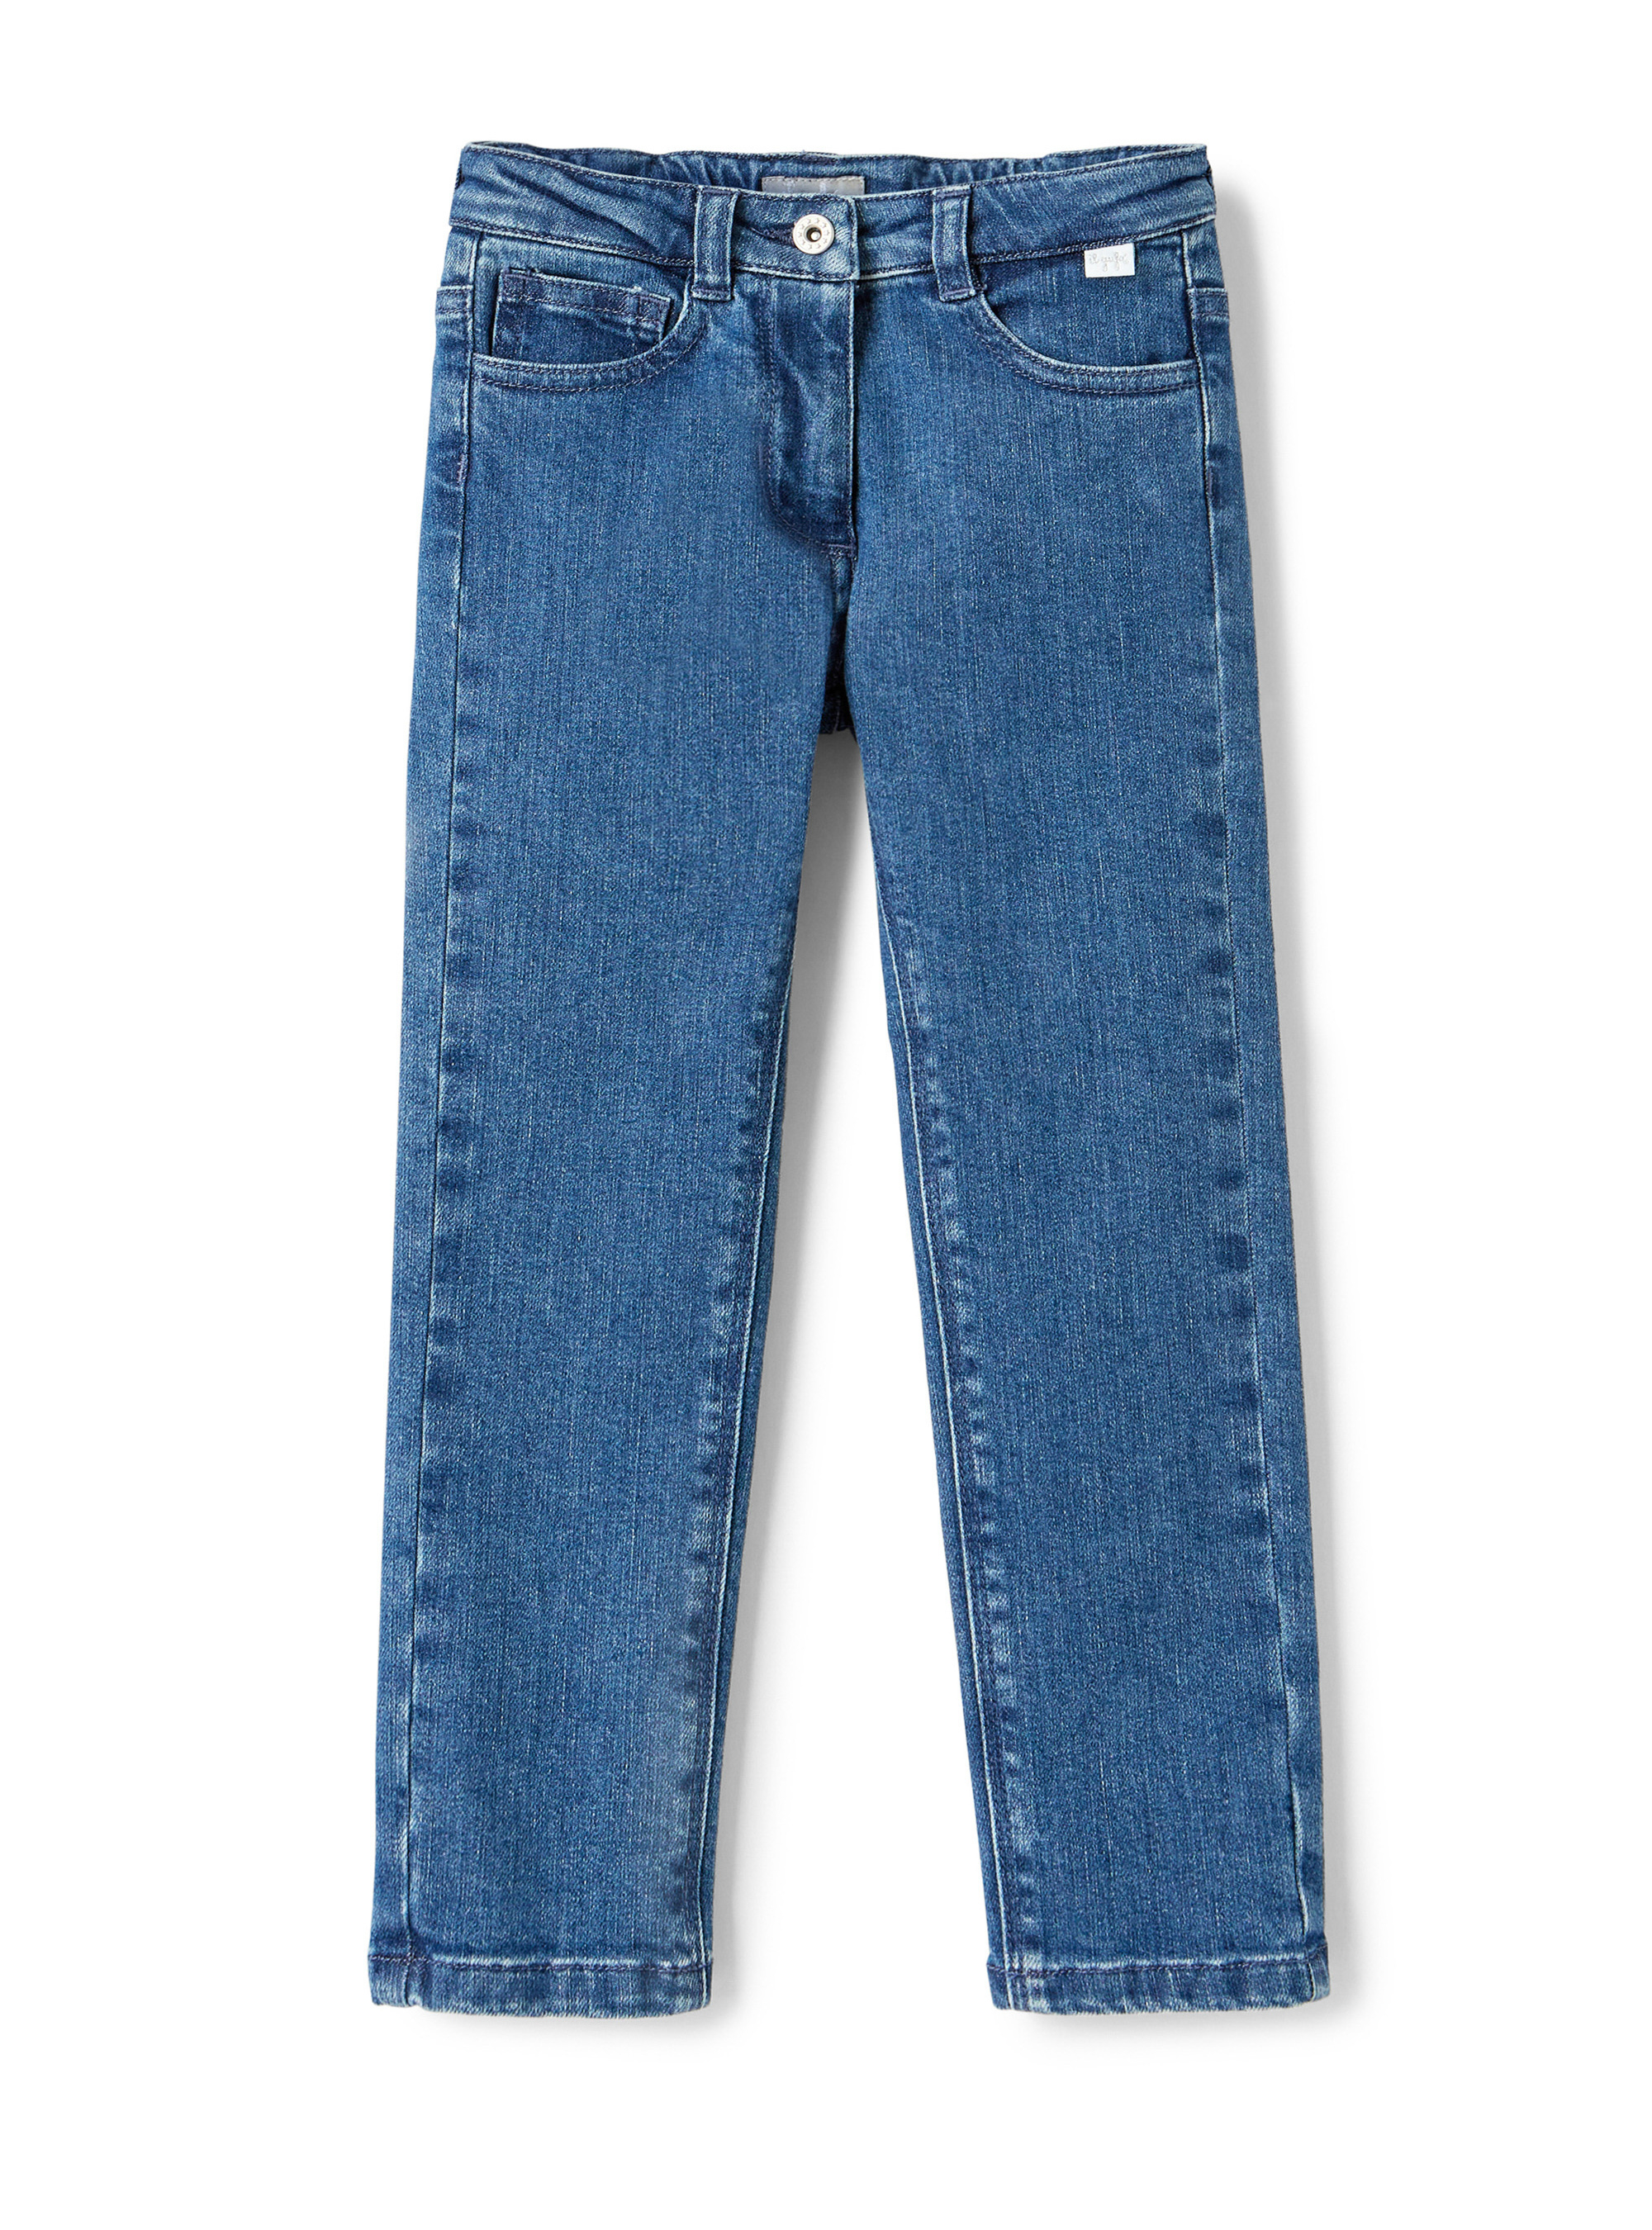 Blue denim skinny jeans - Trousers - Il Gufo